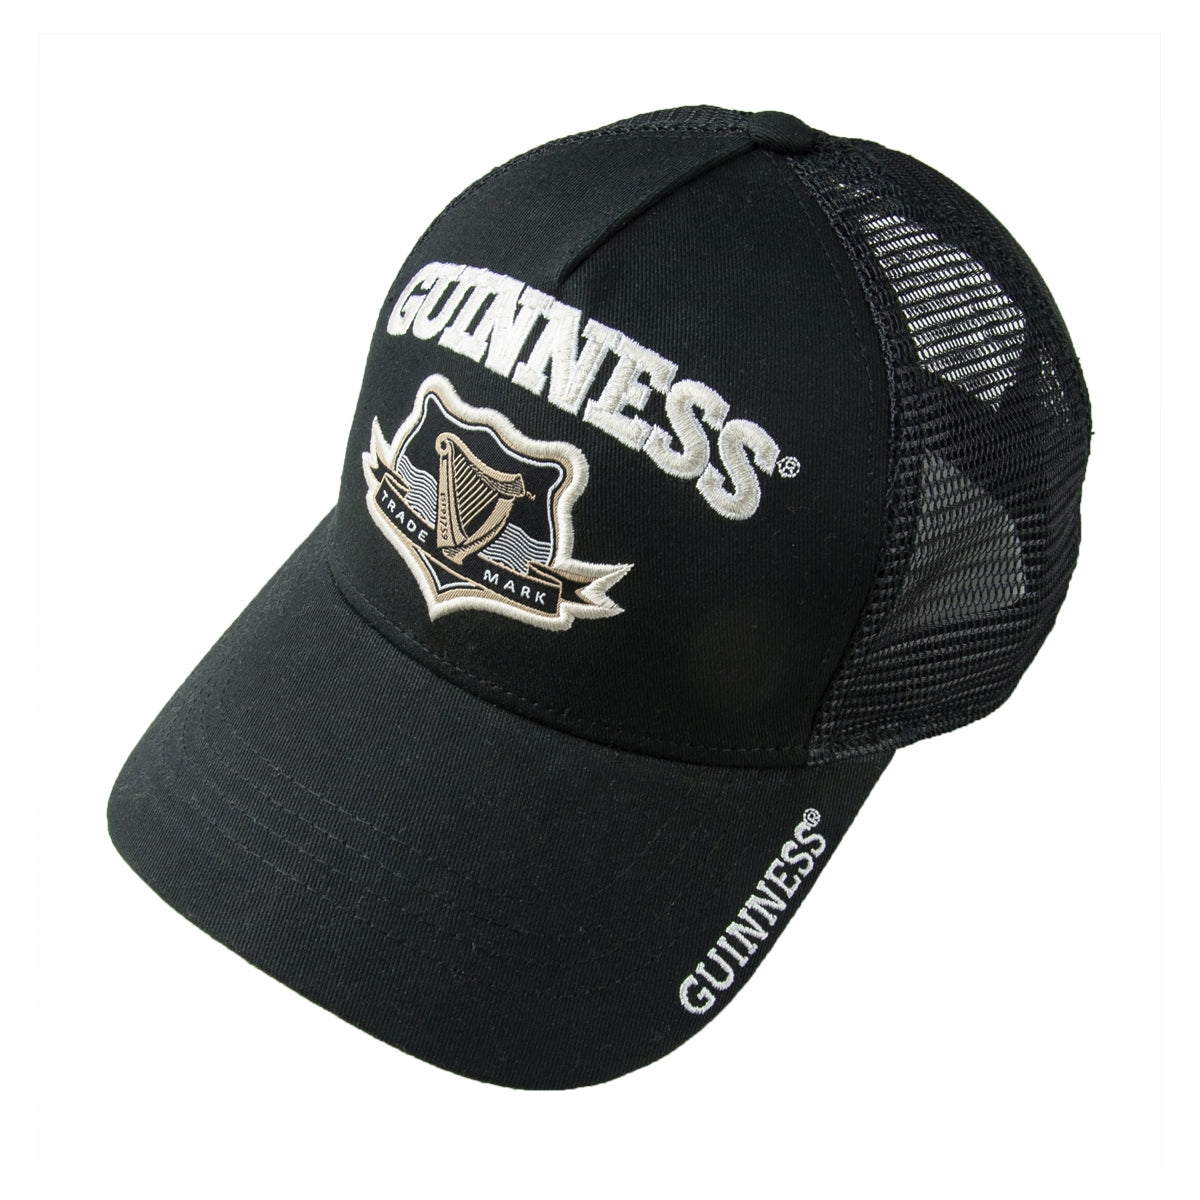 Guinness UK's Guinness Black Adjustable Trucker Hat has been replaced with the Guinness Black Trucker Baseball Cap.